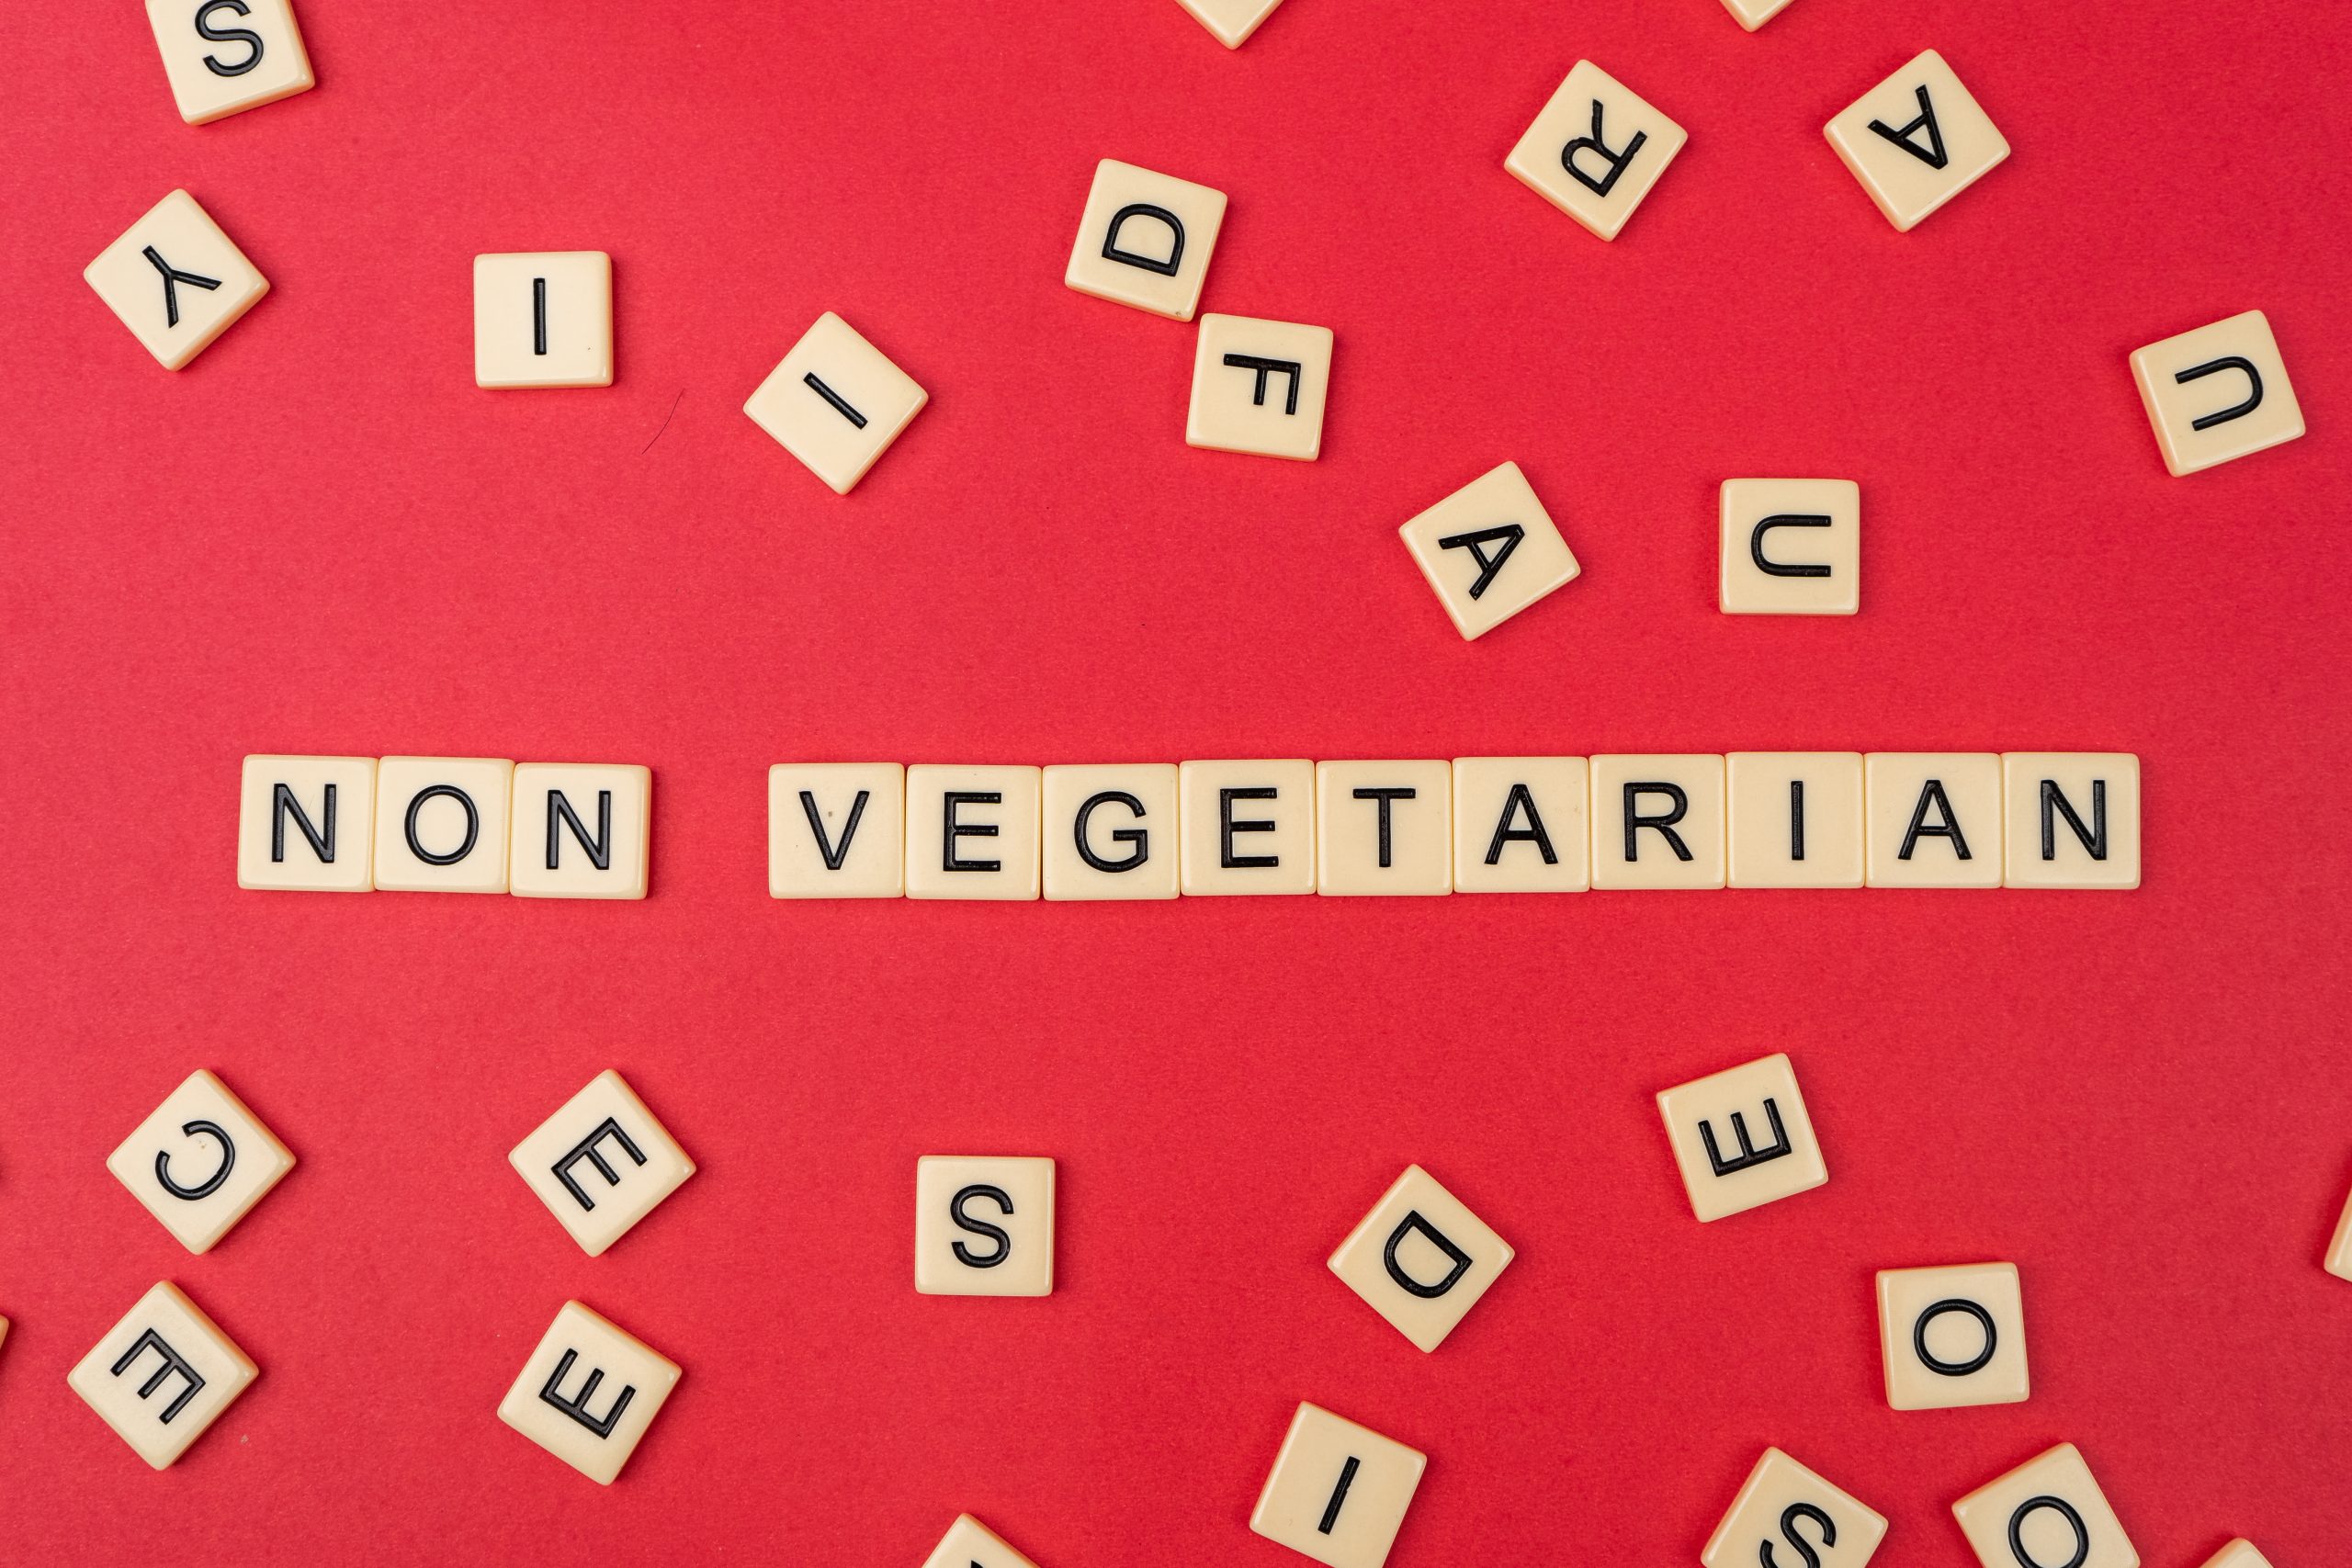 Non vegetarian written on scrabble